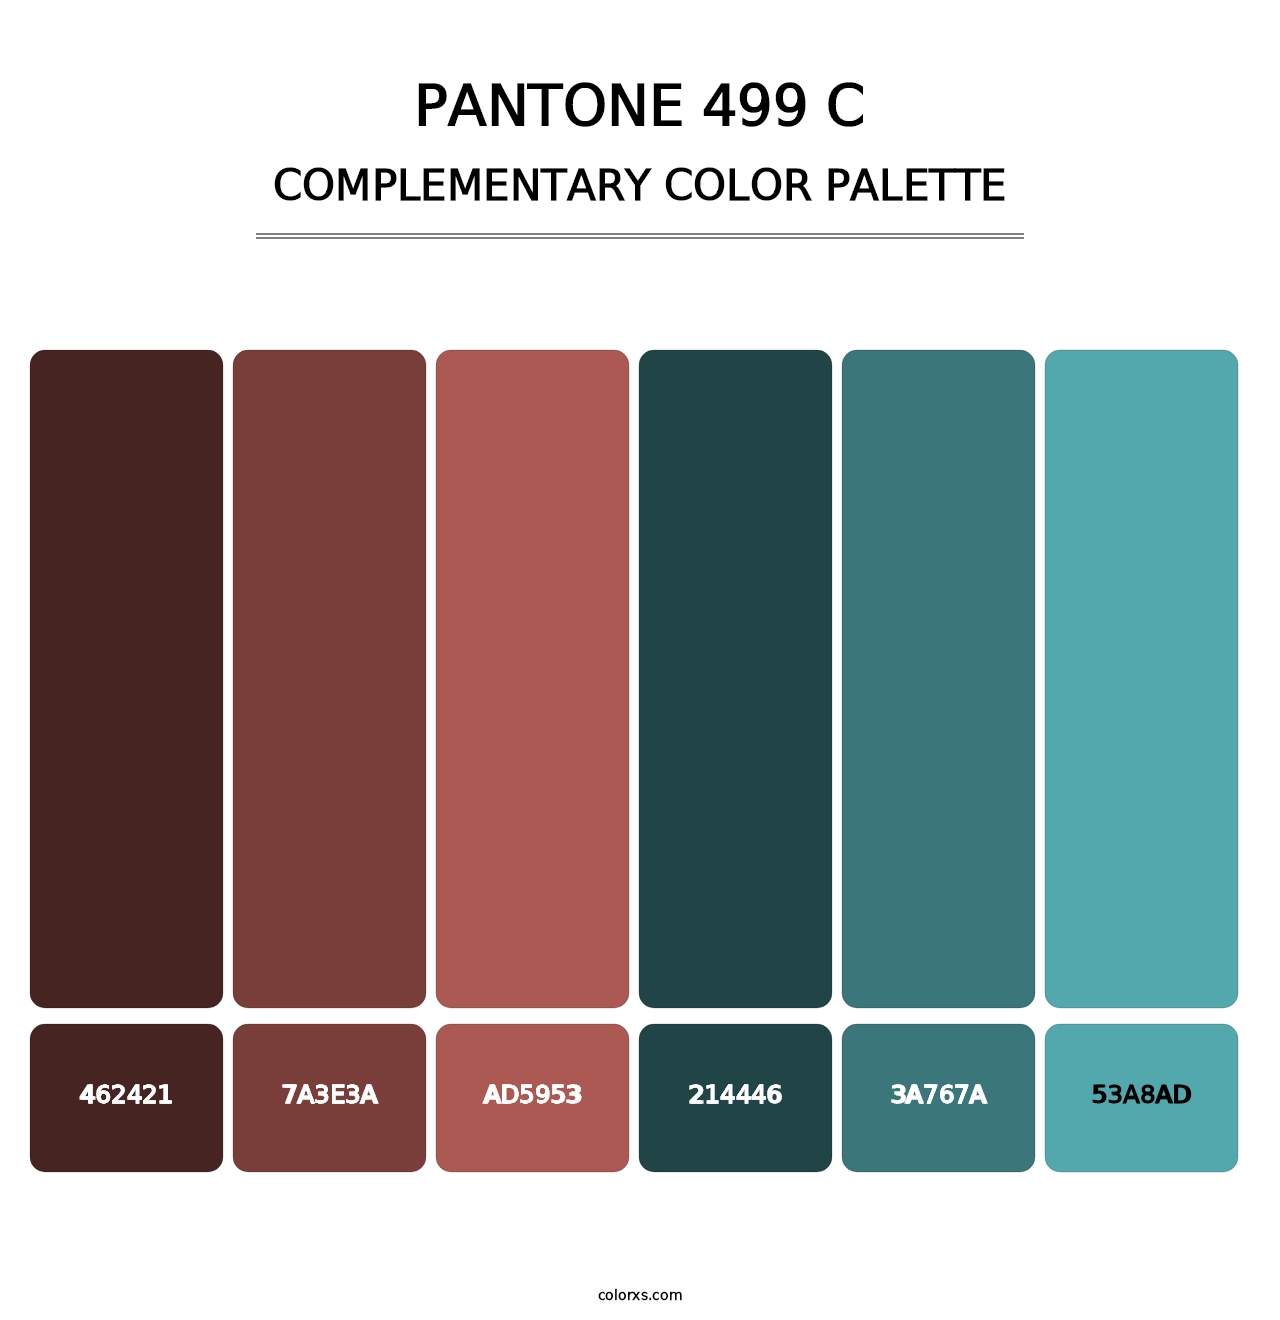 PANTONE 499 C - Complementary Color Palette